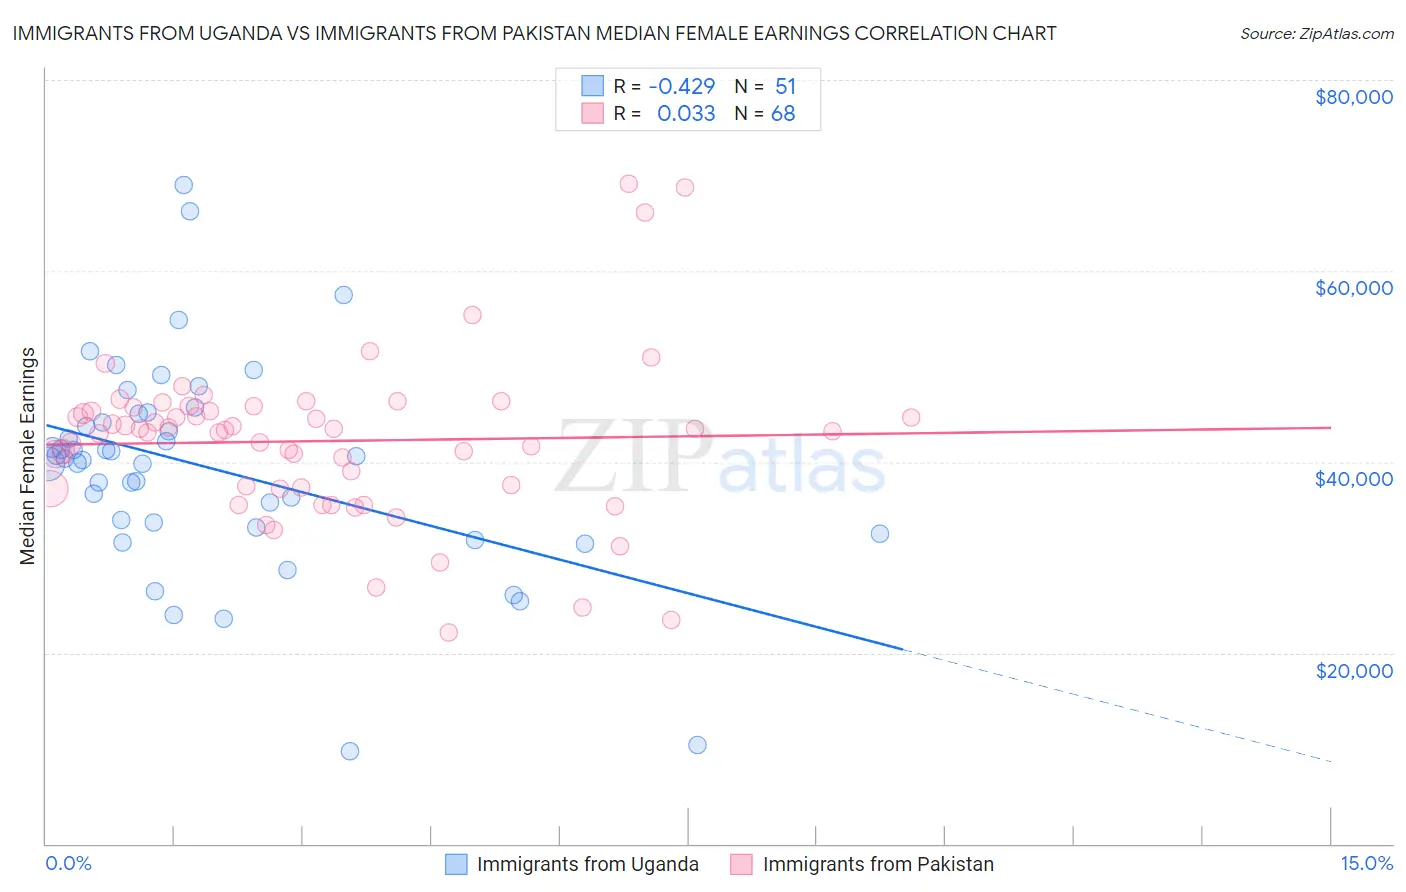 Immigrants from Uganda vs Immigrants from Pakistan Median Female Earnings